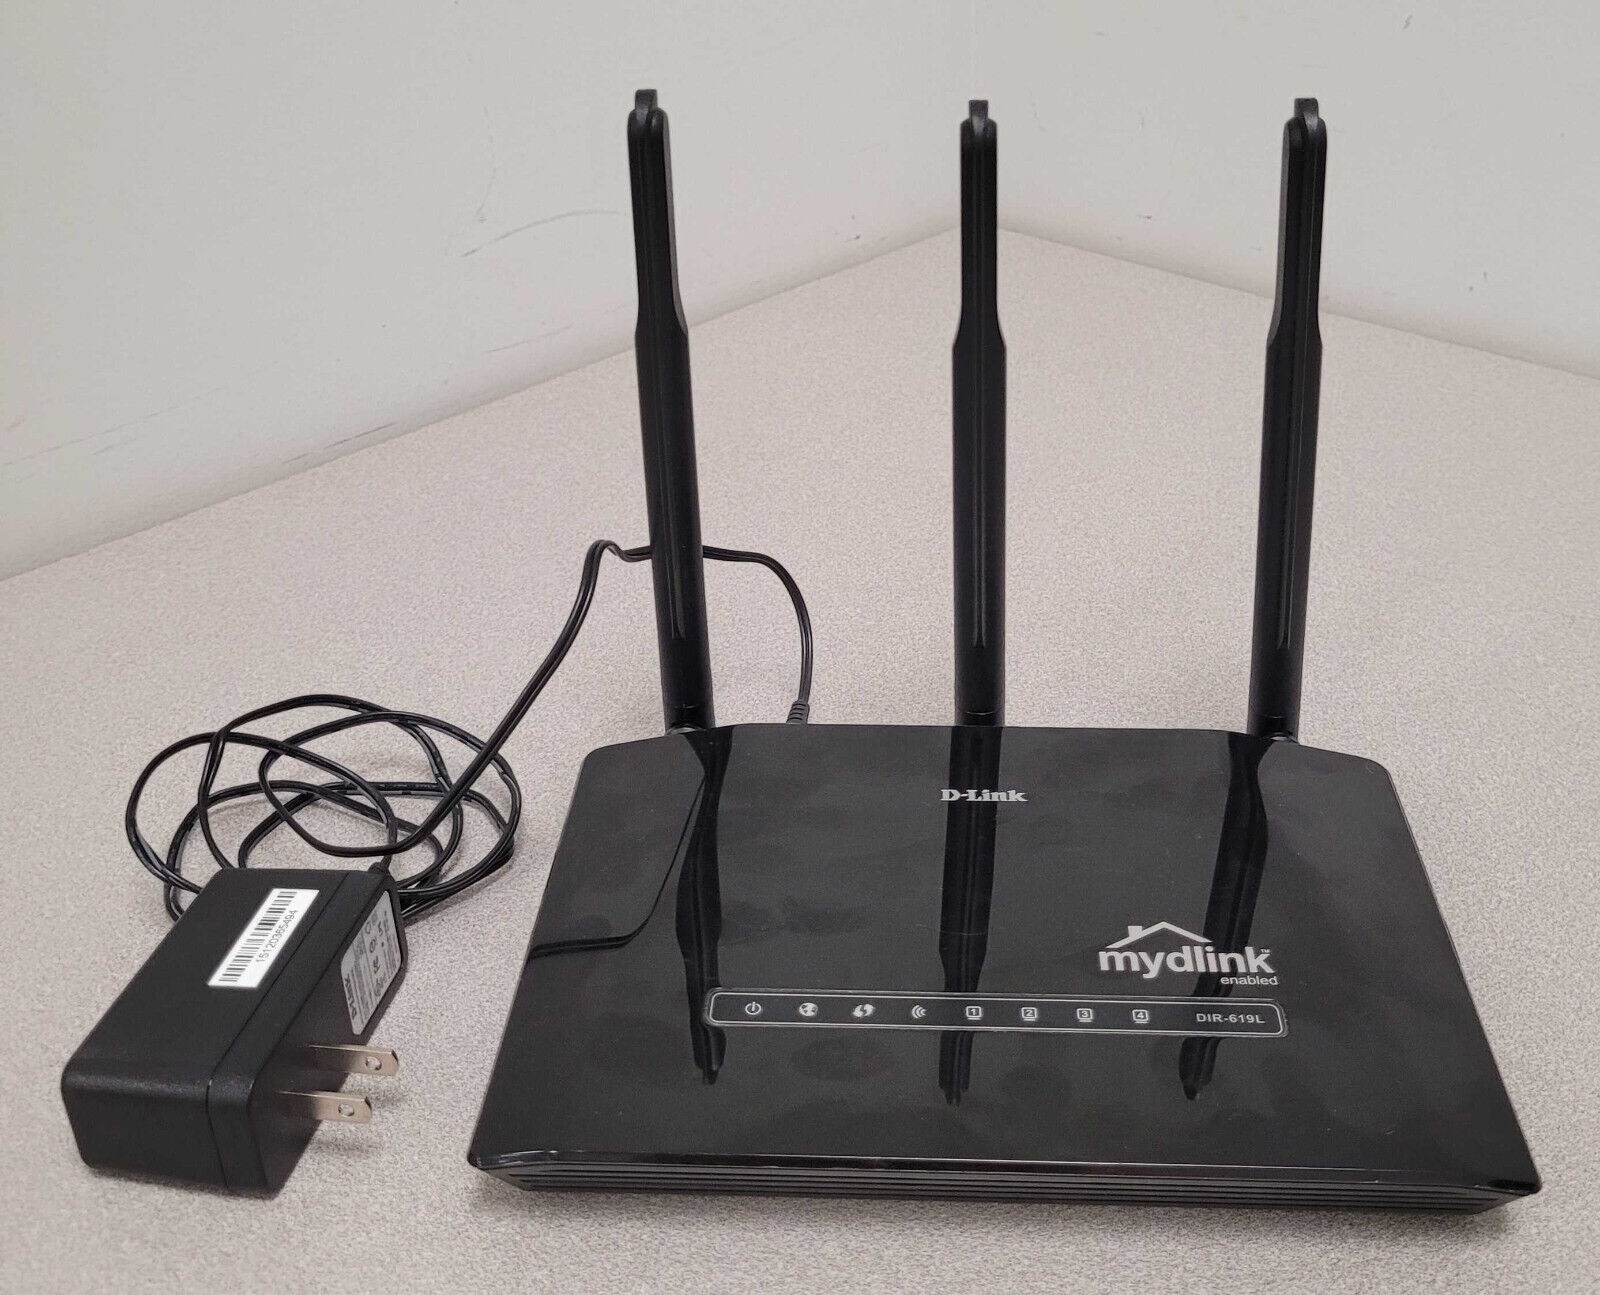 D-Link DIR-619L-ES mydlink Cloud Router wireless N300 + DGS-1008G Switch